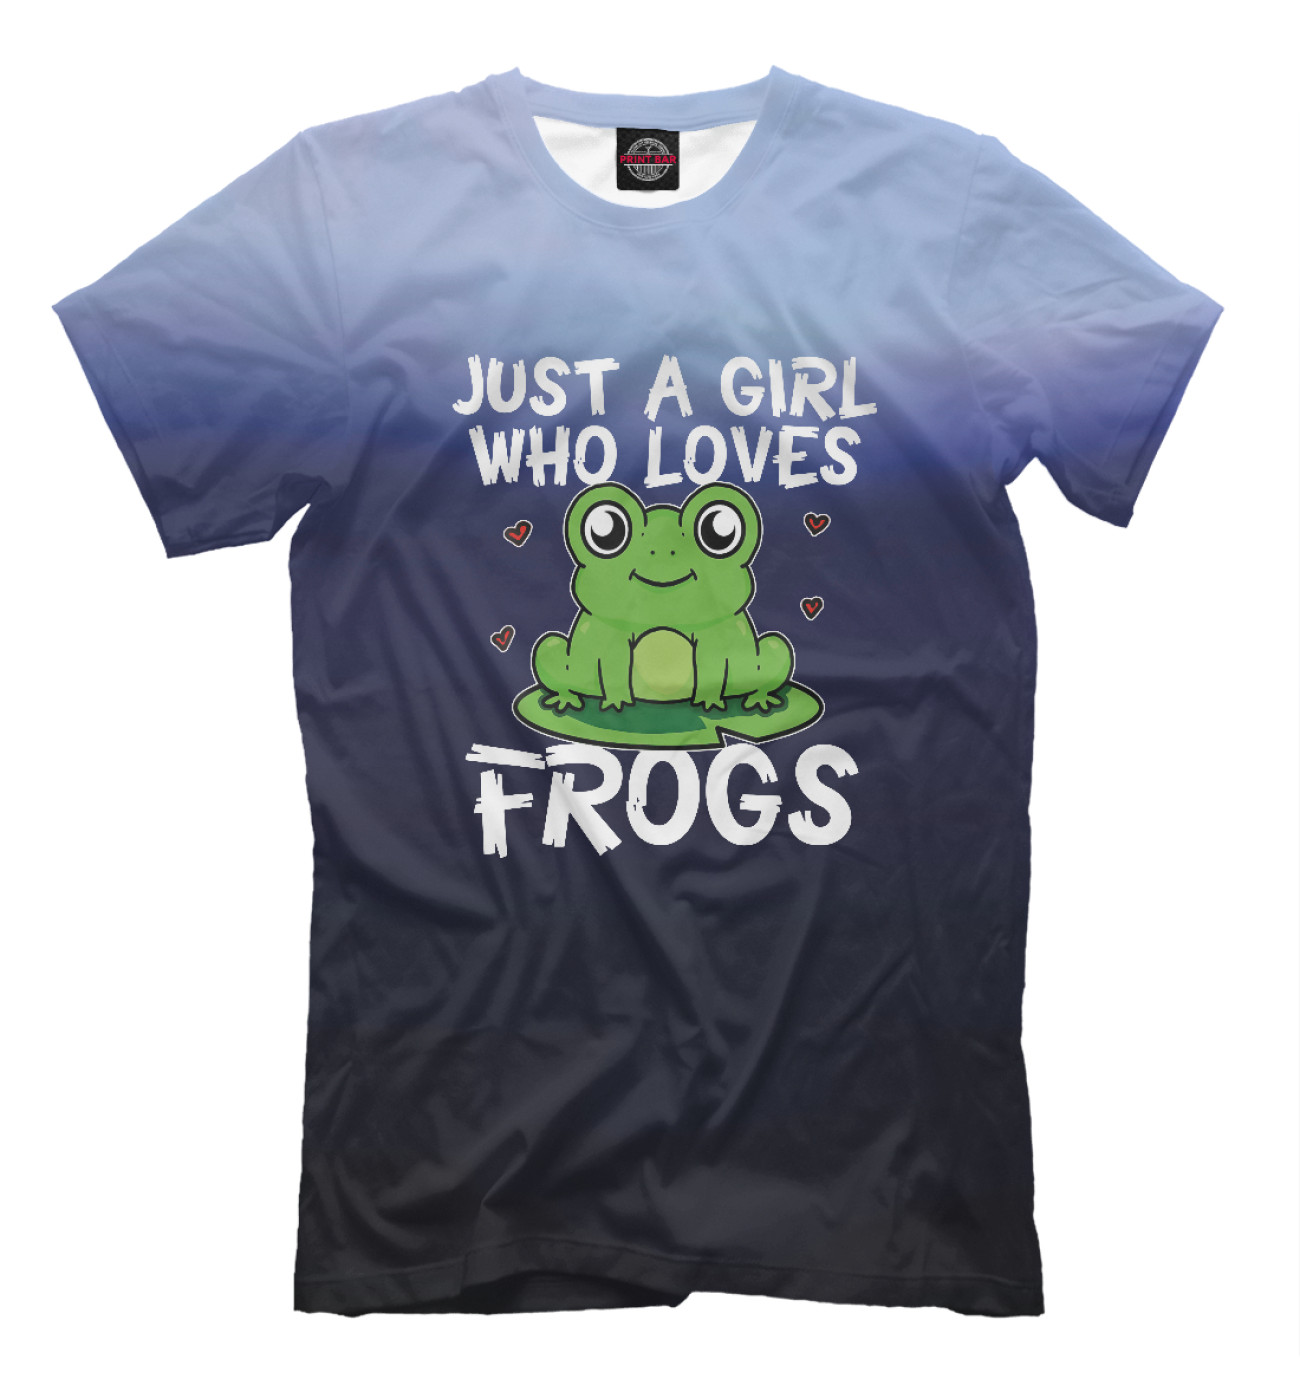 Мужская Футболка Just A Girl Who Loves Frogs, артикул: FRO-941007-fut-2